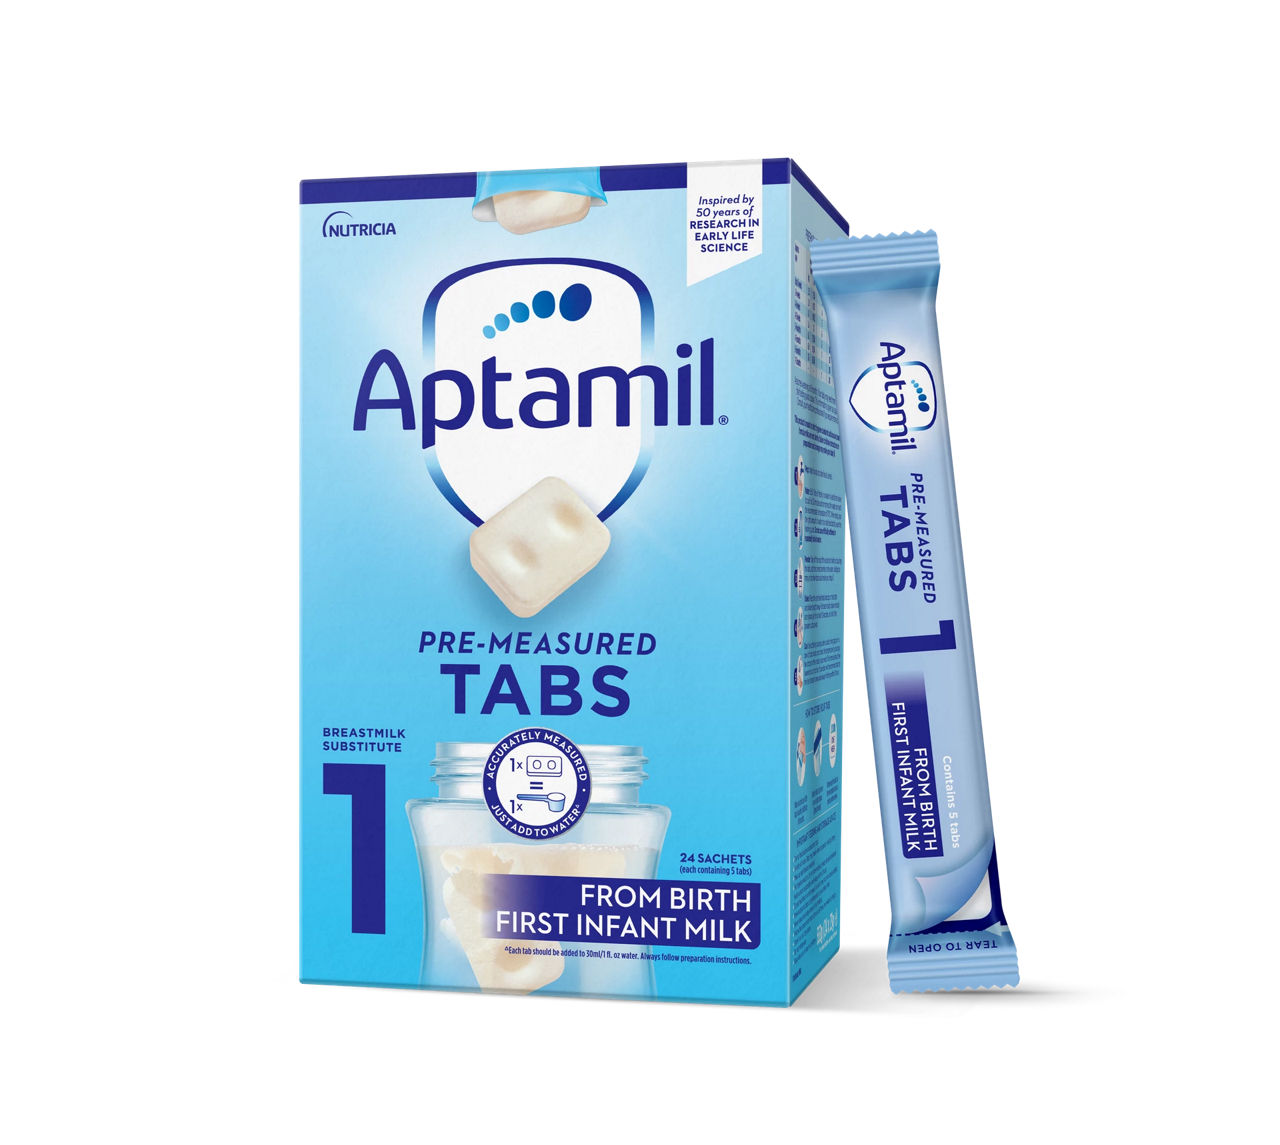 Aptamil First Infant Milk Pre-Measured Tabs